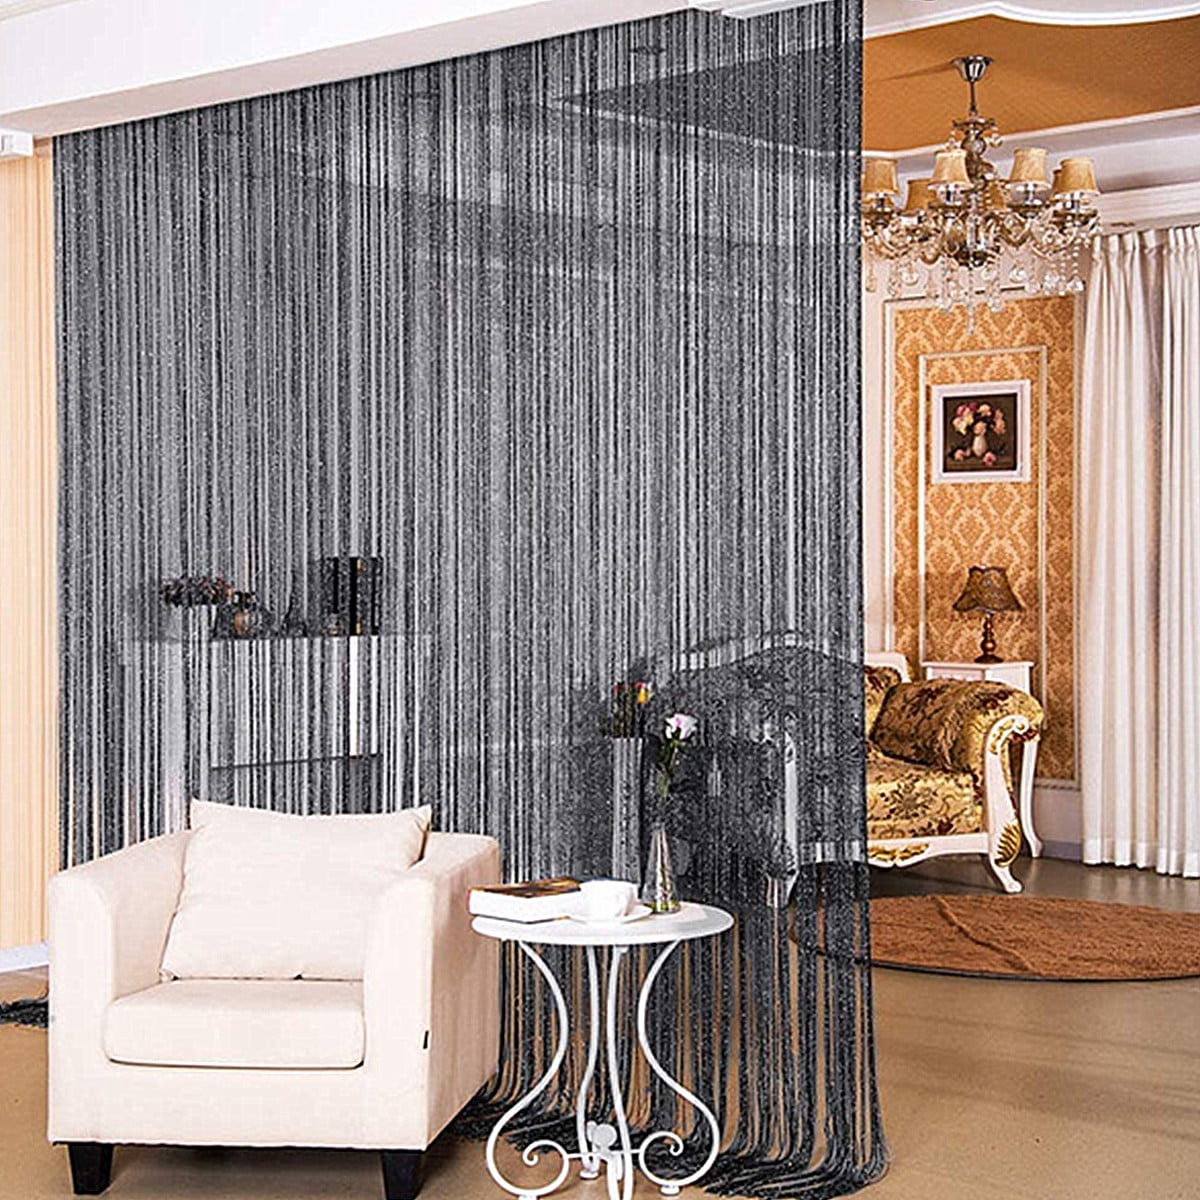 20 Colorful Plain Thread Curtain String Panels Tassels Room Divider 1Set 3Panels 